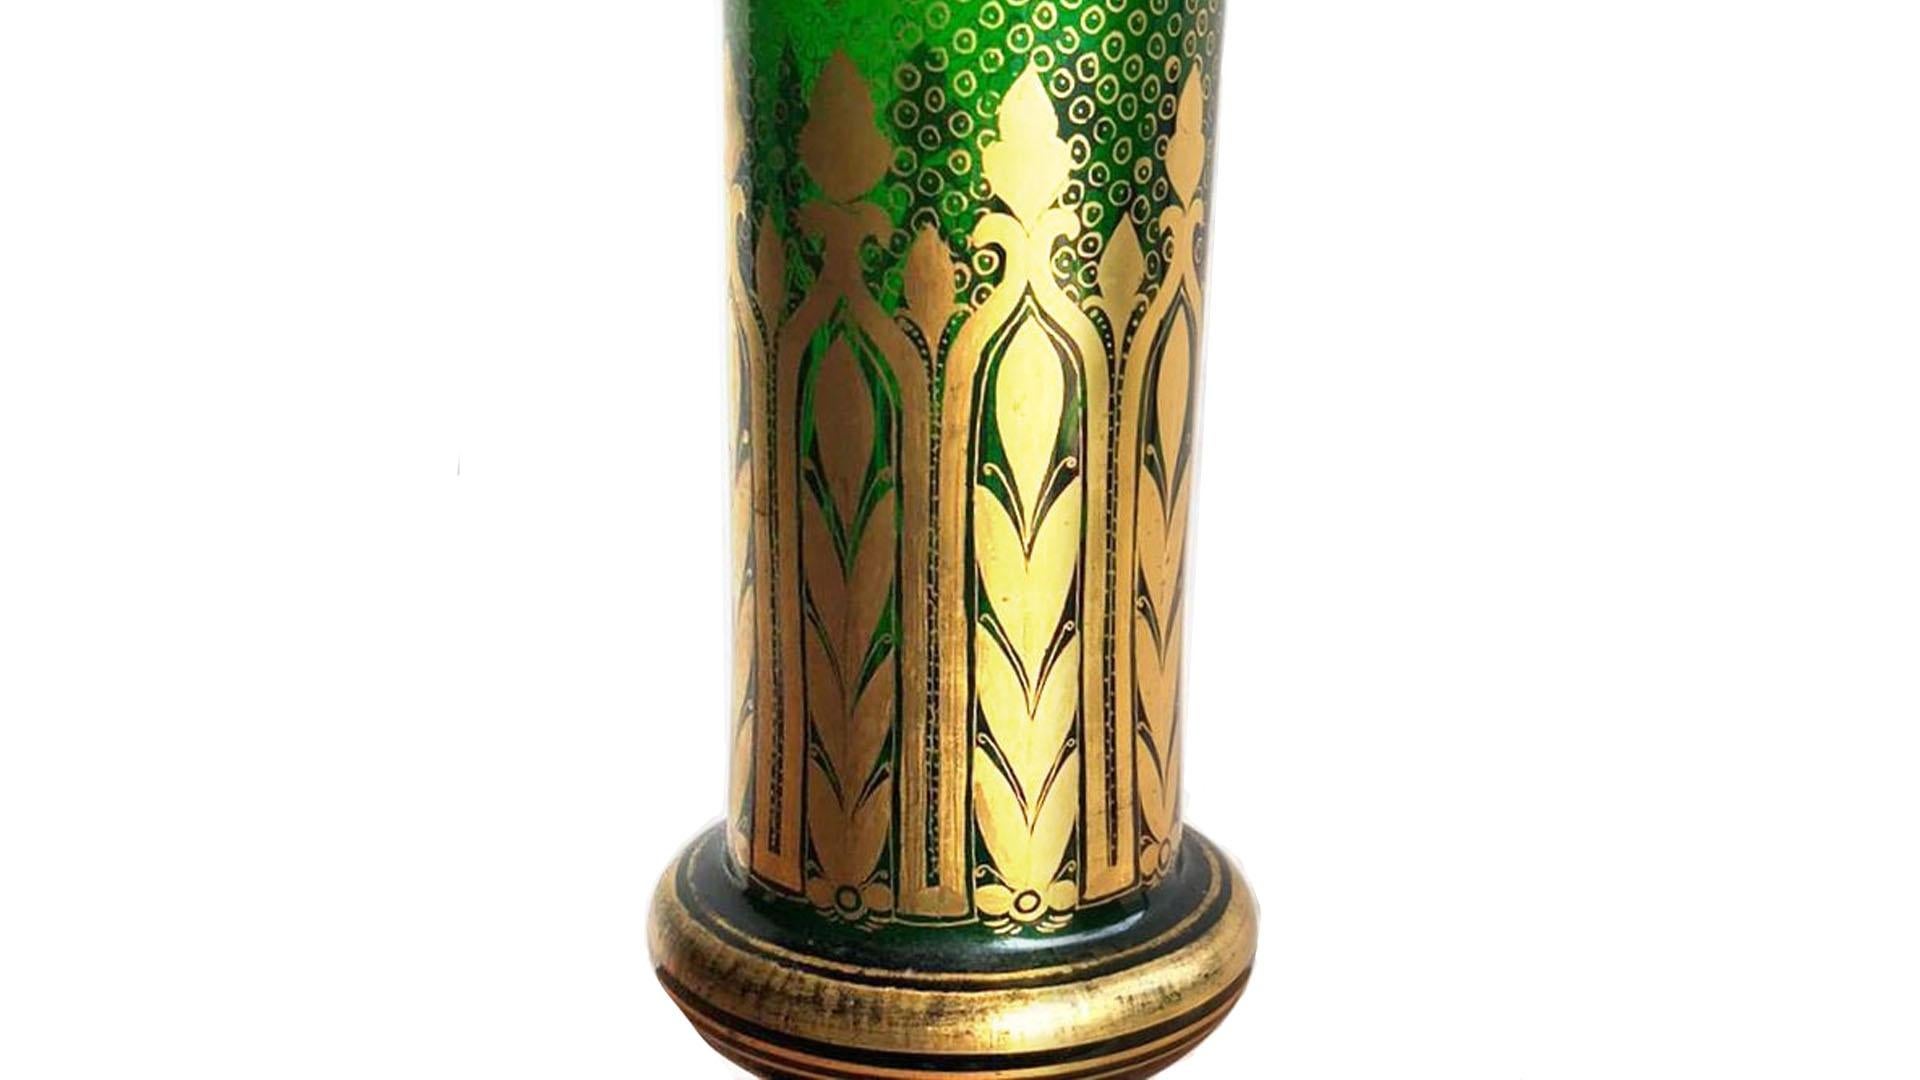 Emerald Green & Heavy Gilt Moser Tulip Crystal Centrepiece Vase 19th Century For Sale 1